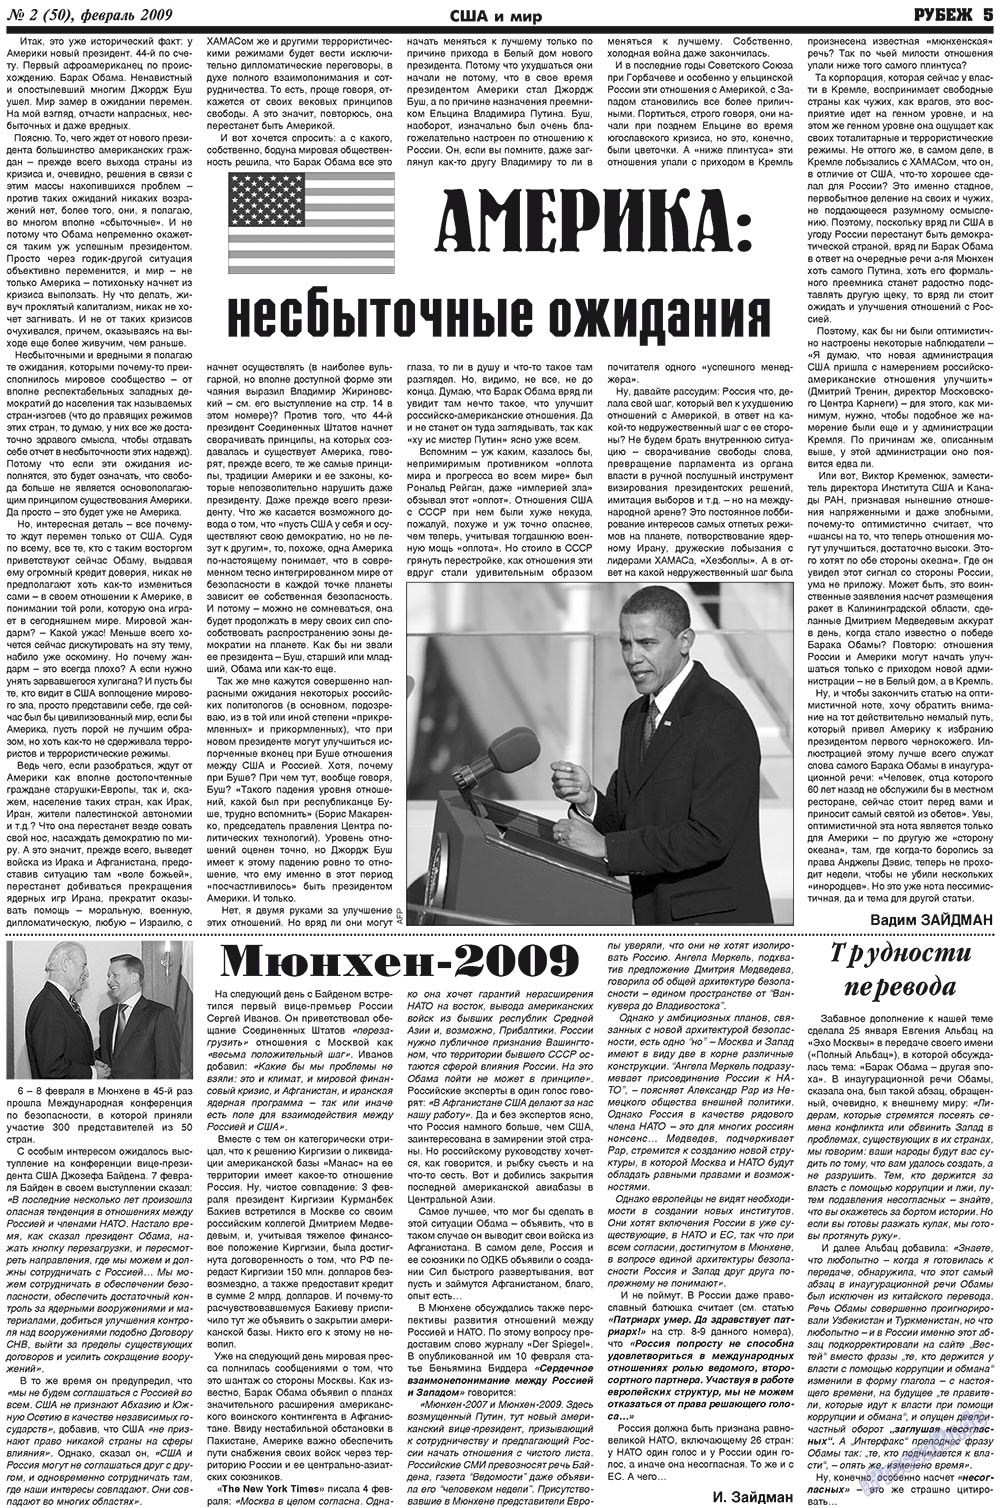 Рубеж, газета. 2009 №2 стр.5